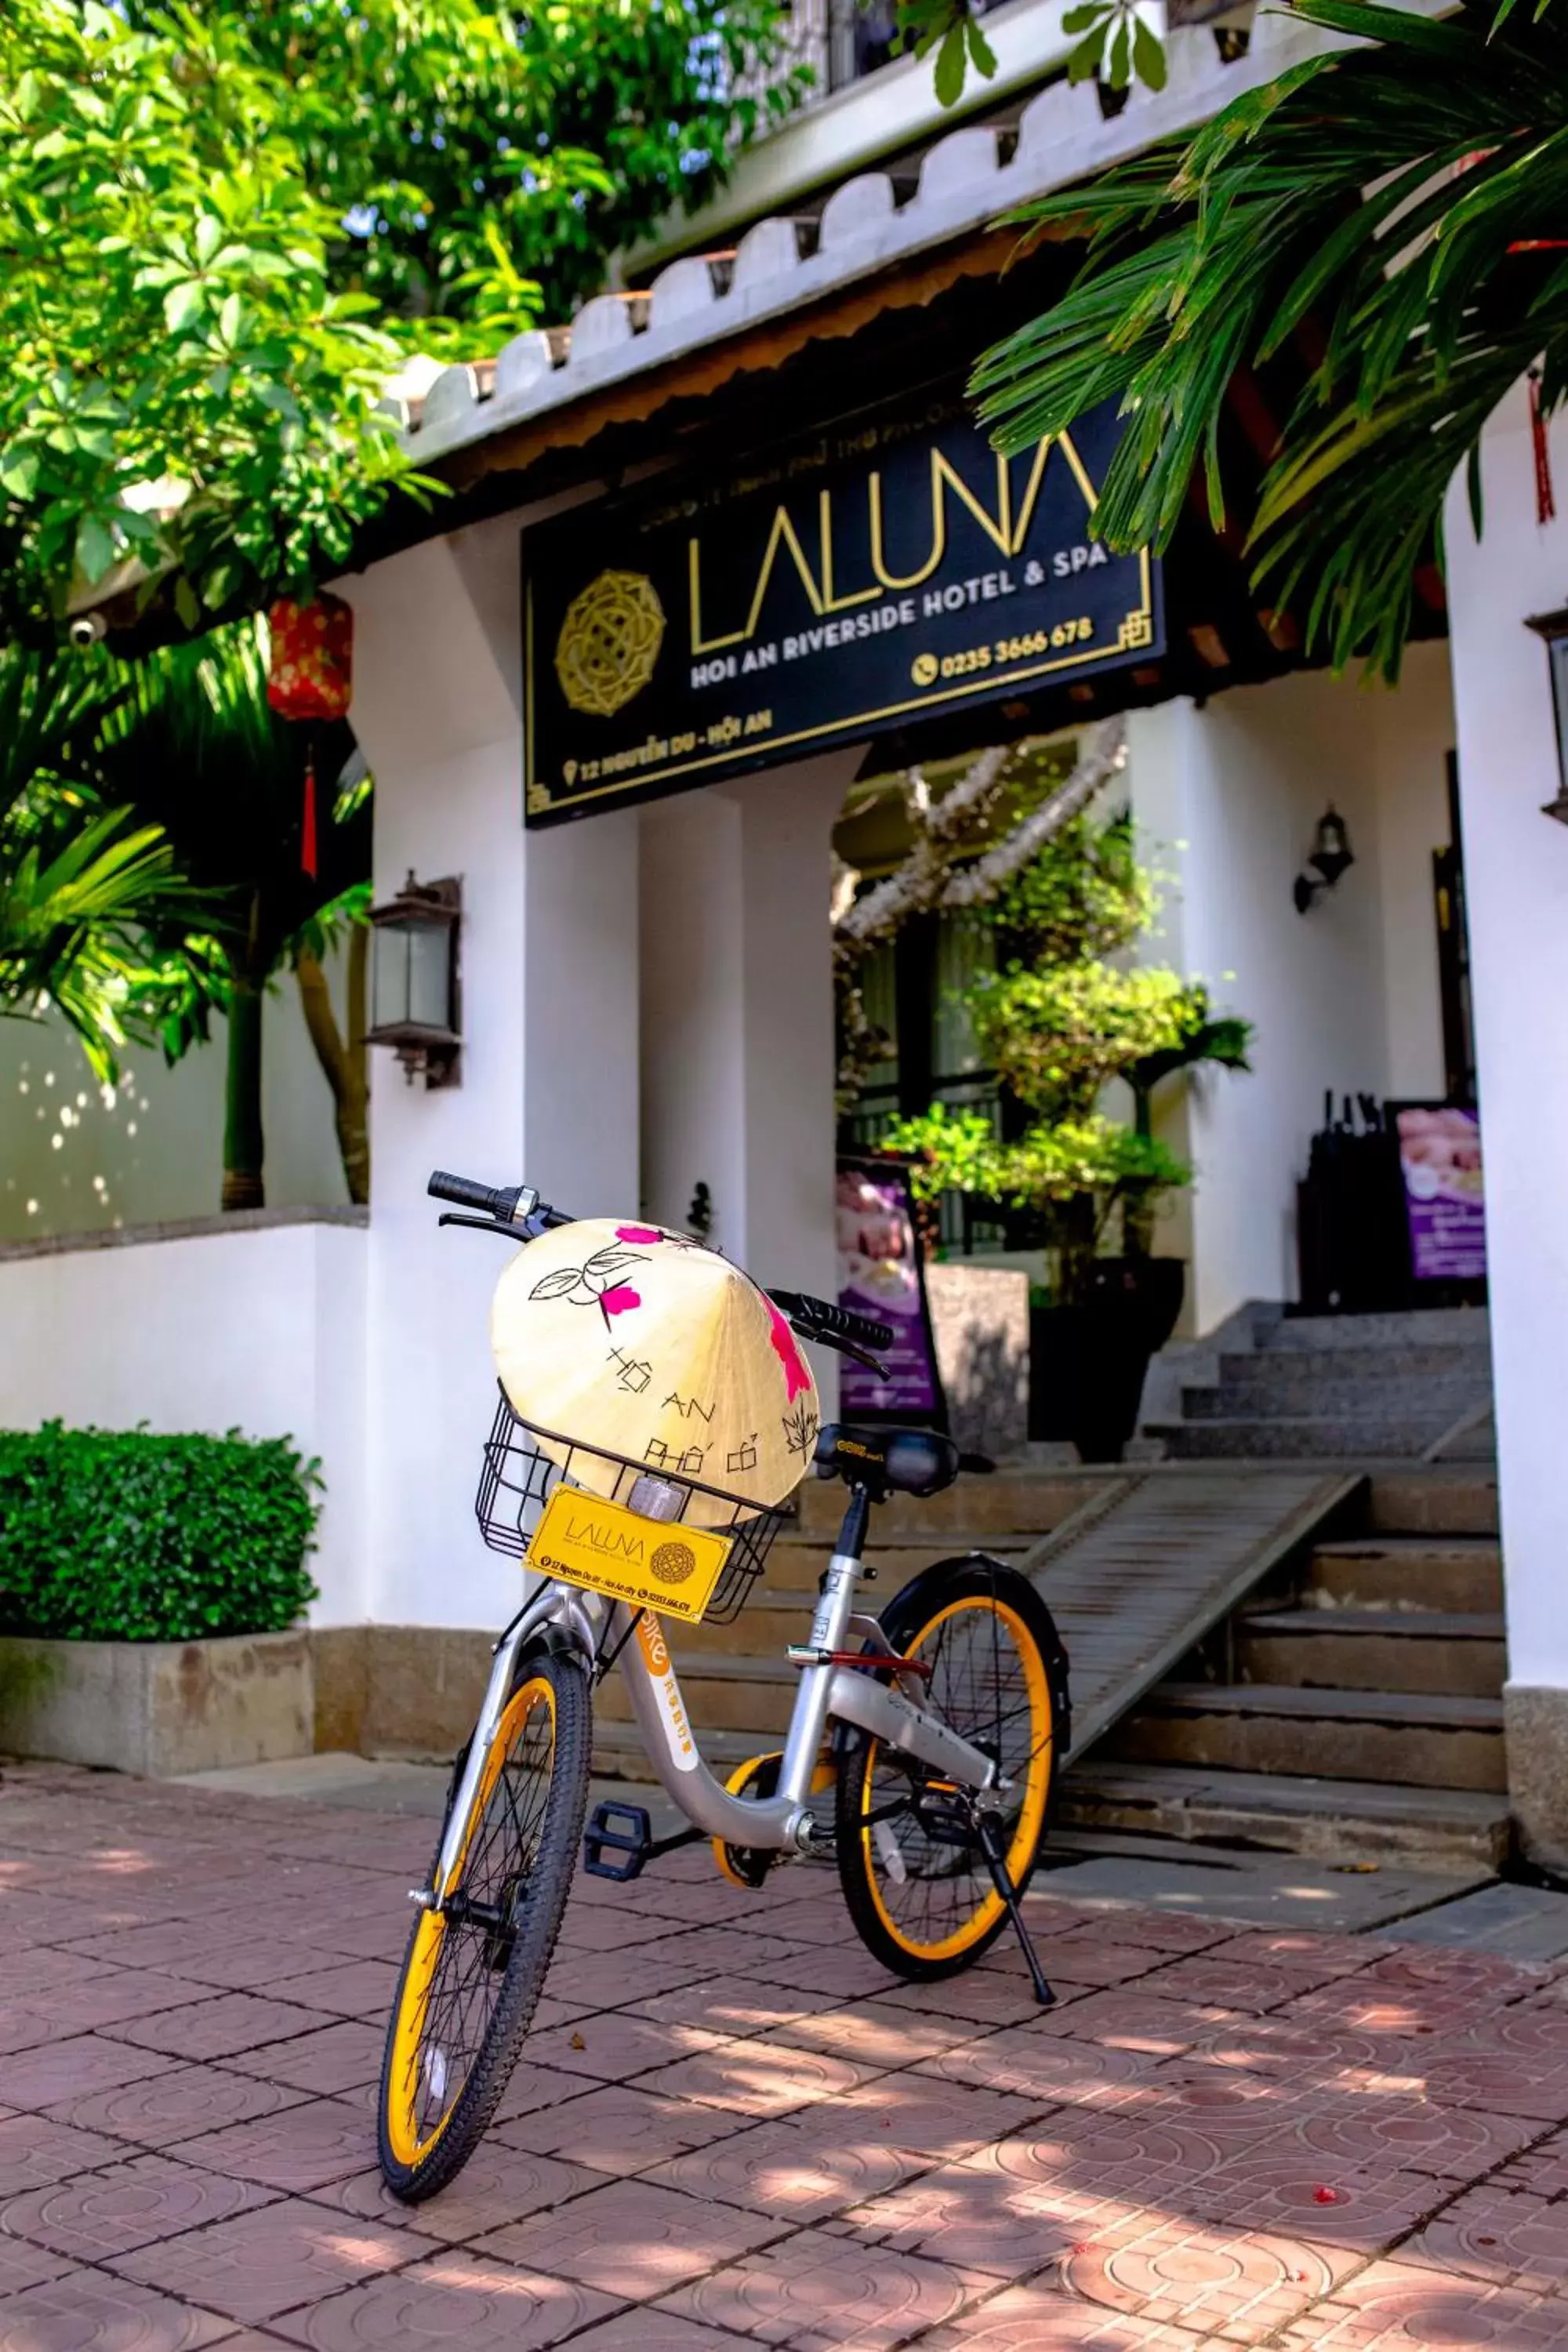 Cycling in Laluna Hoi An Riverside Hotel & Spa